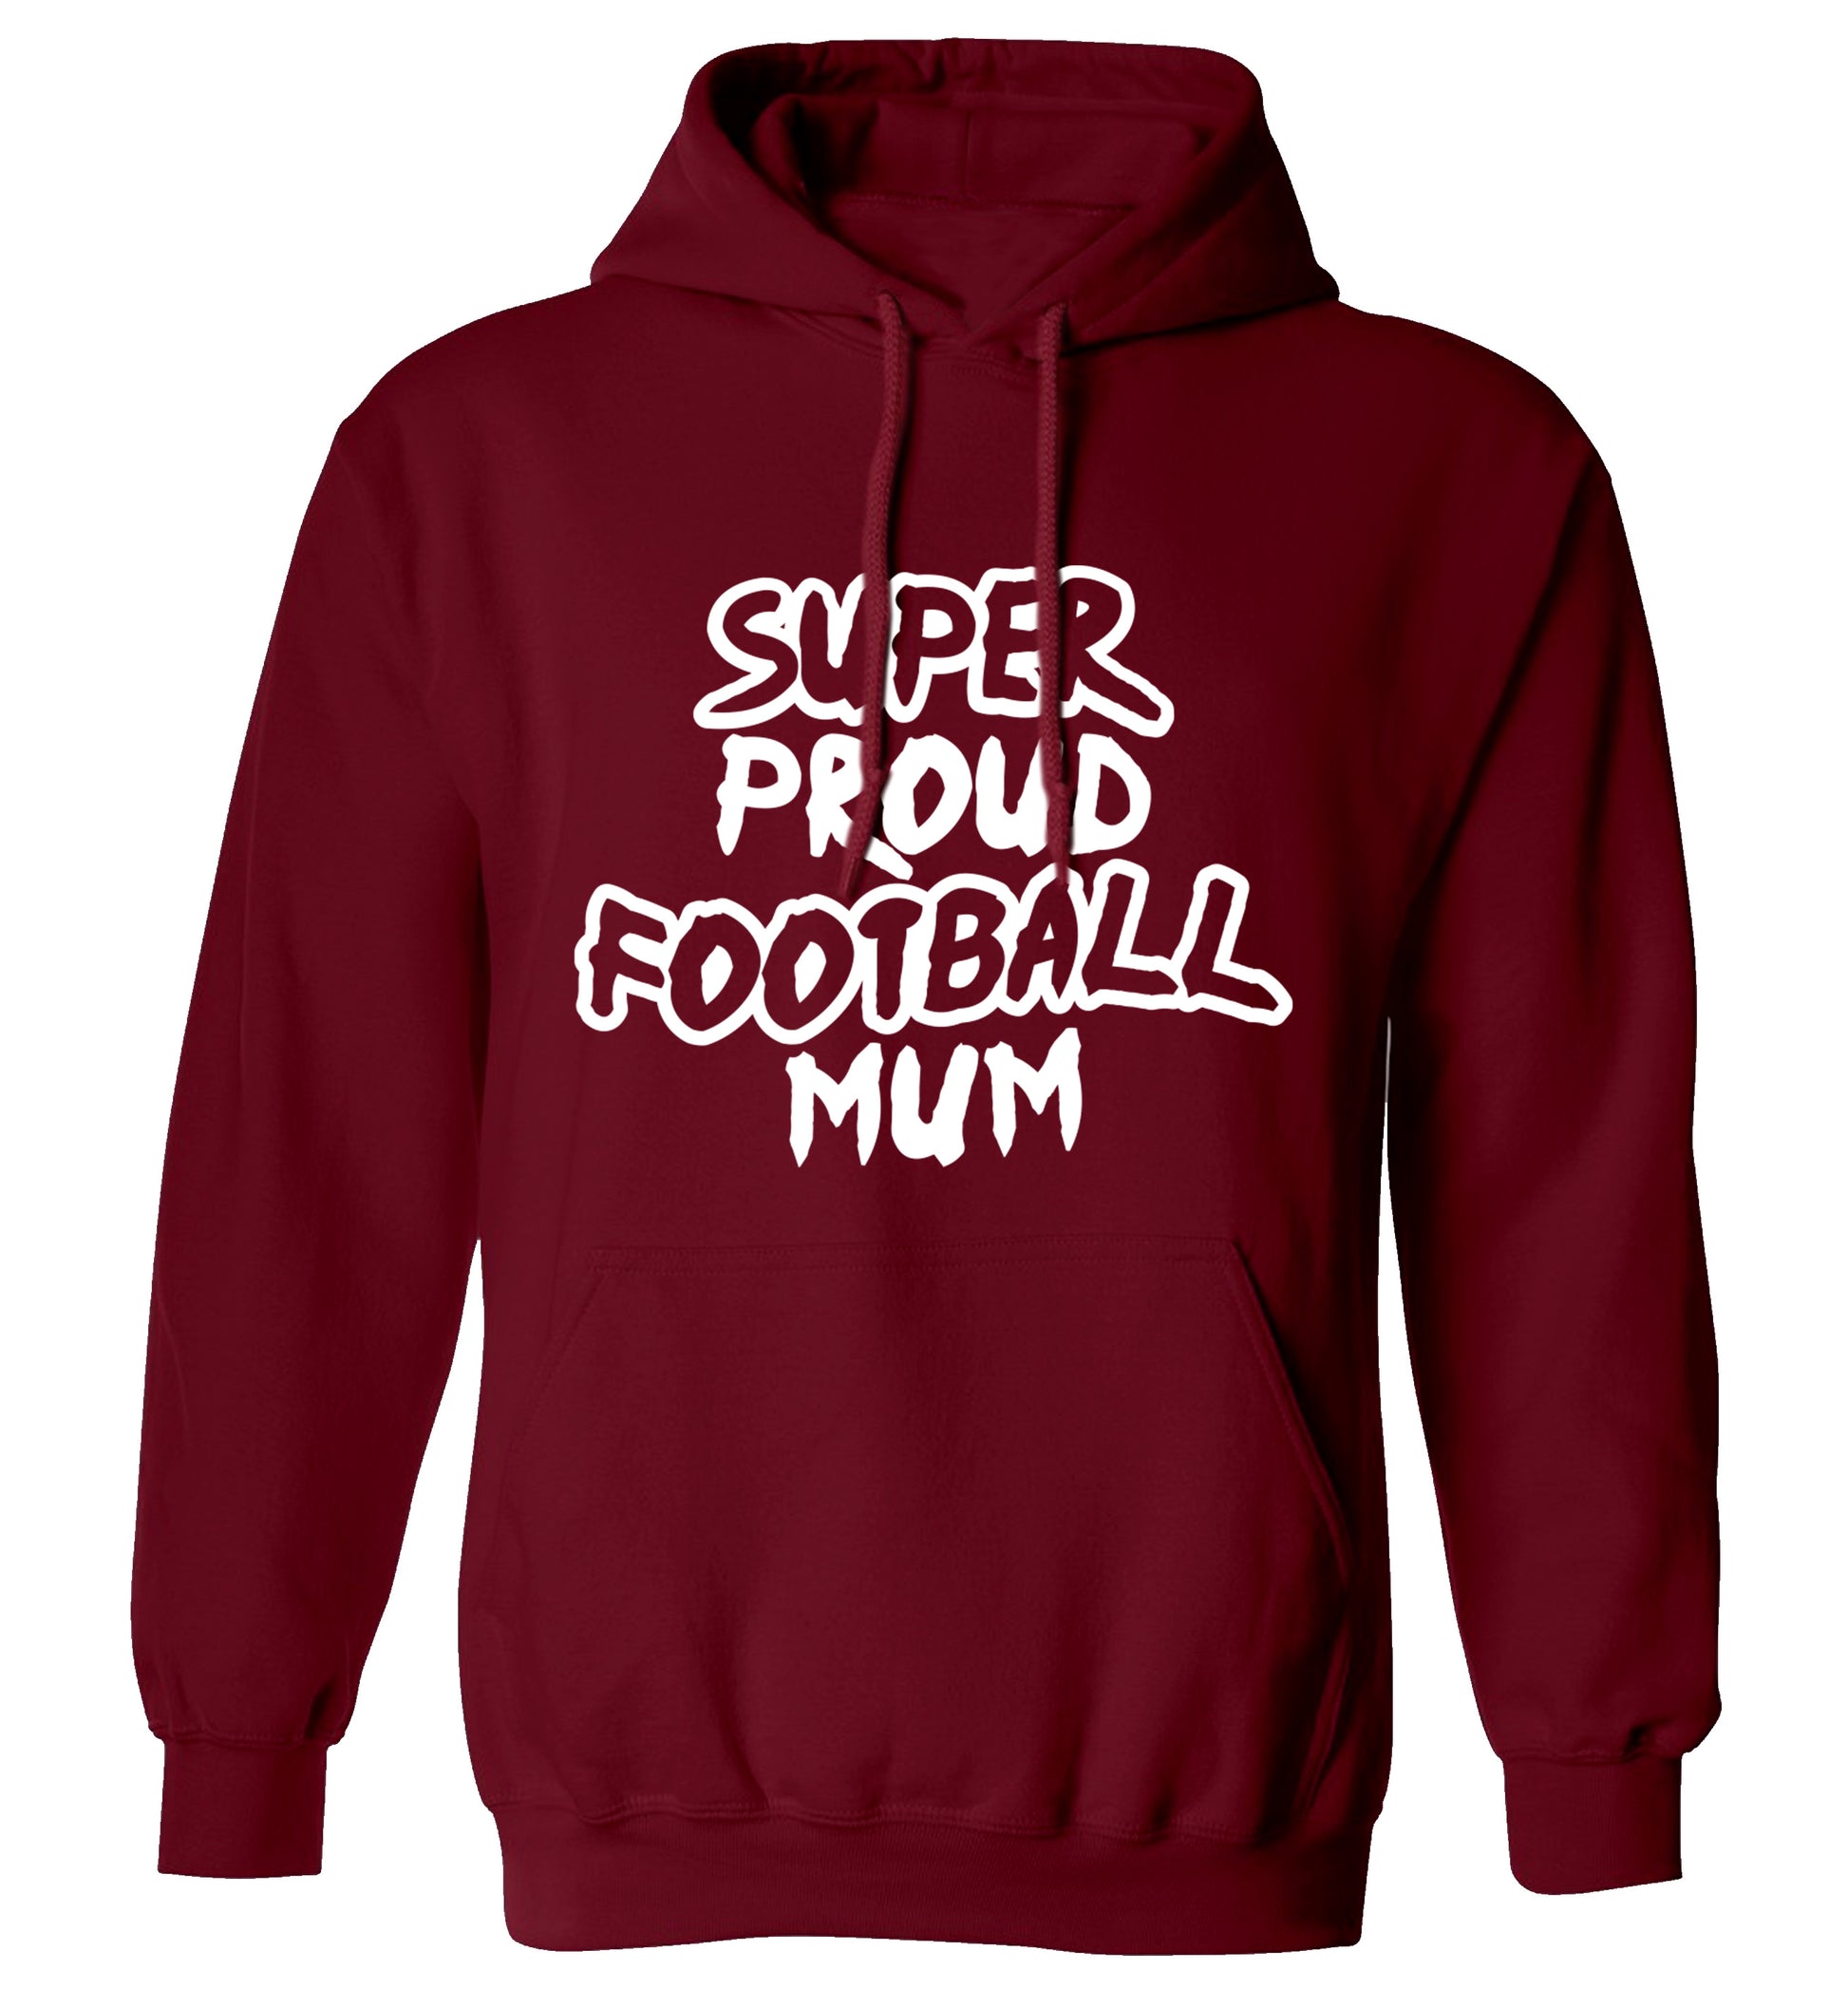 Super proud football mum adults unisexmaroon hoodie 2XL